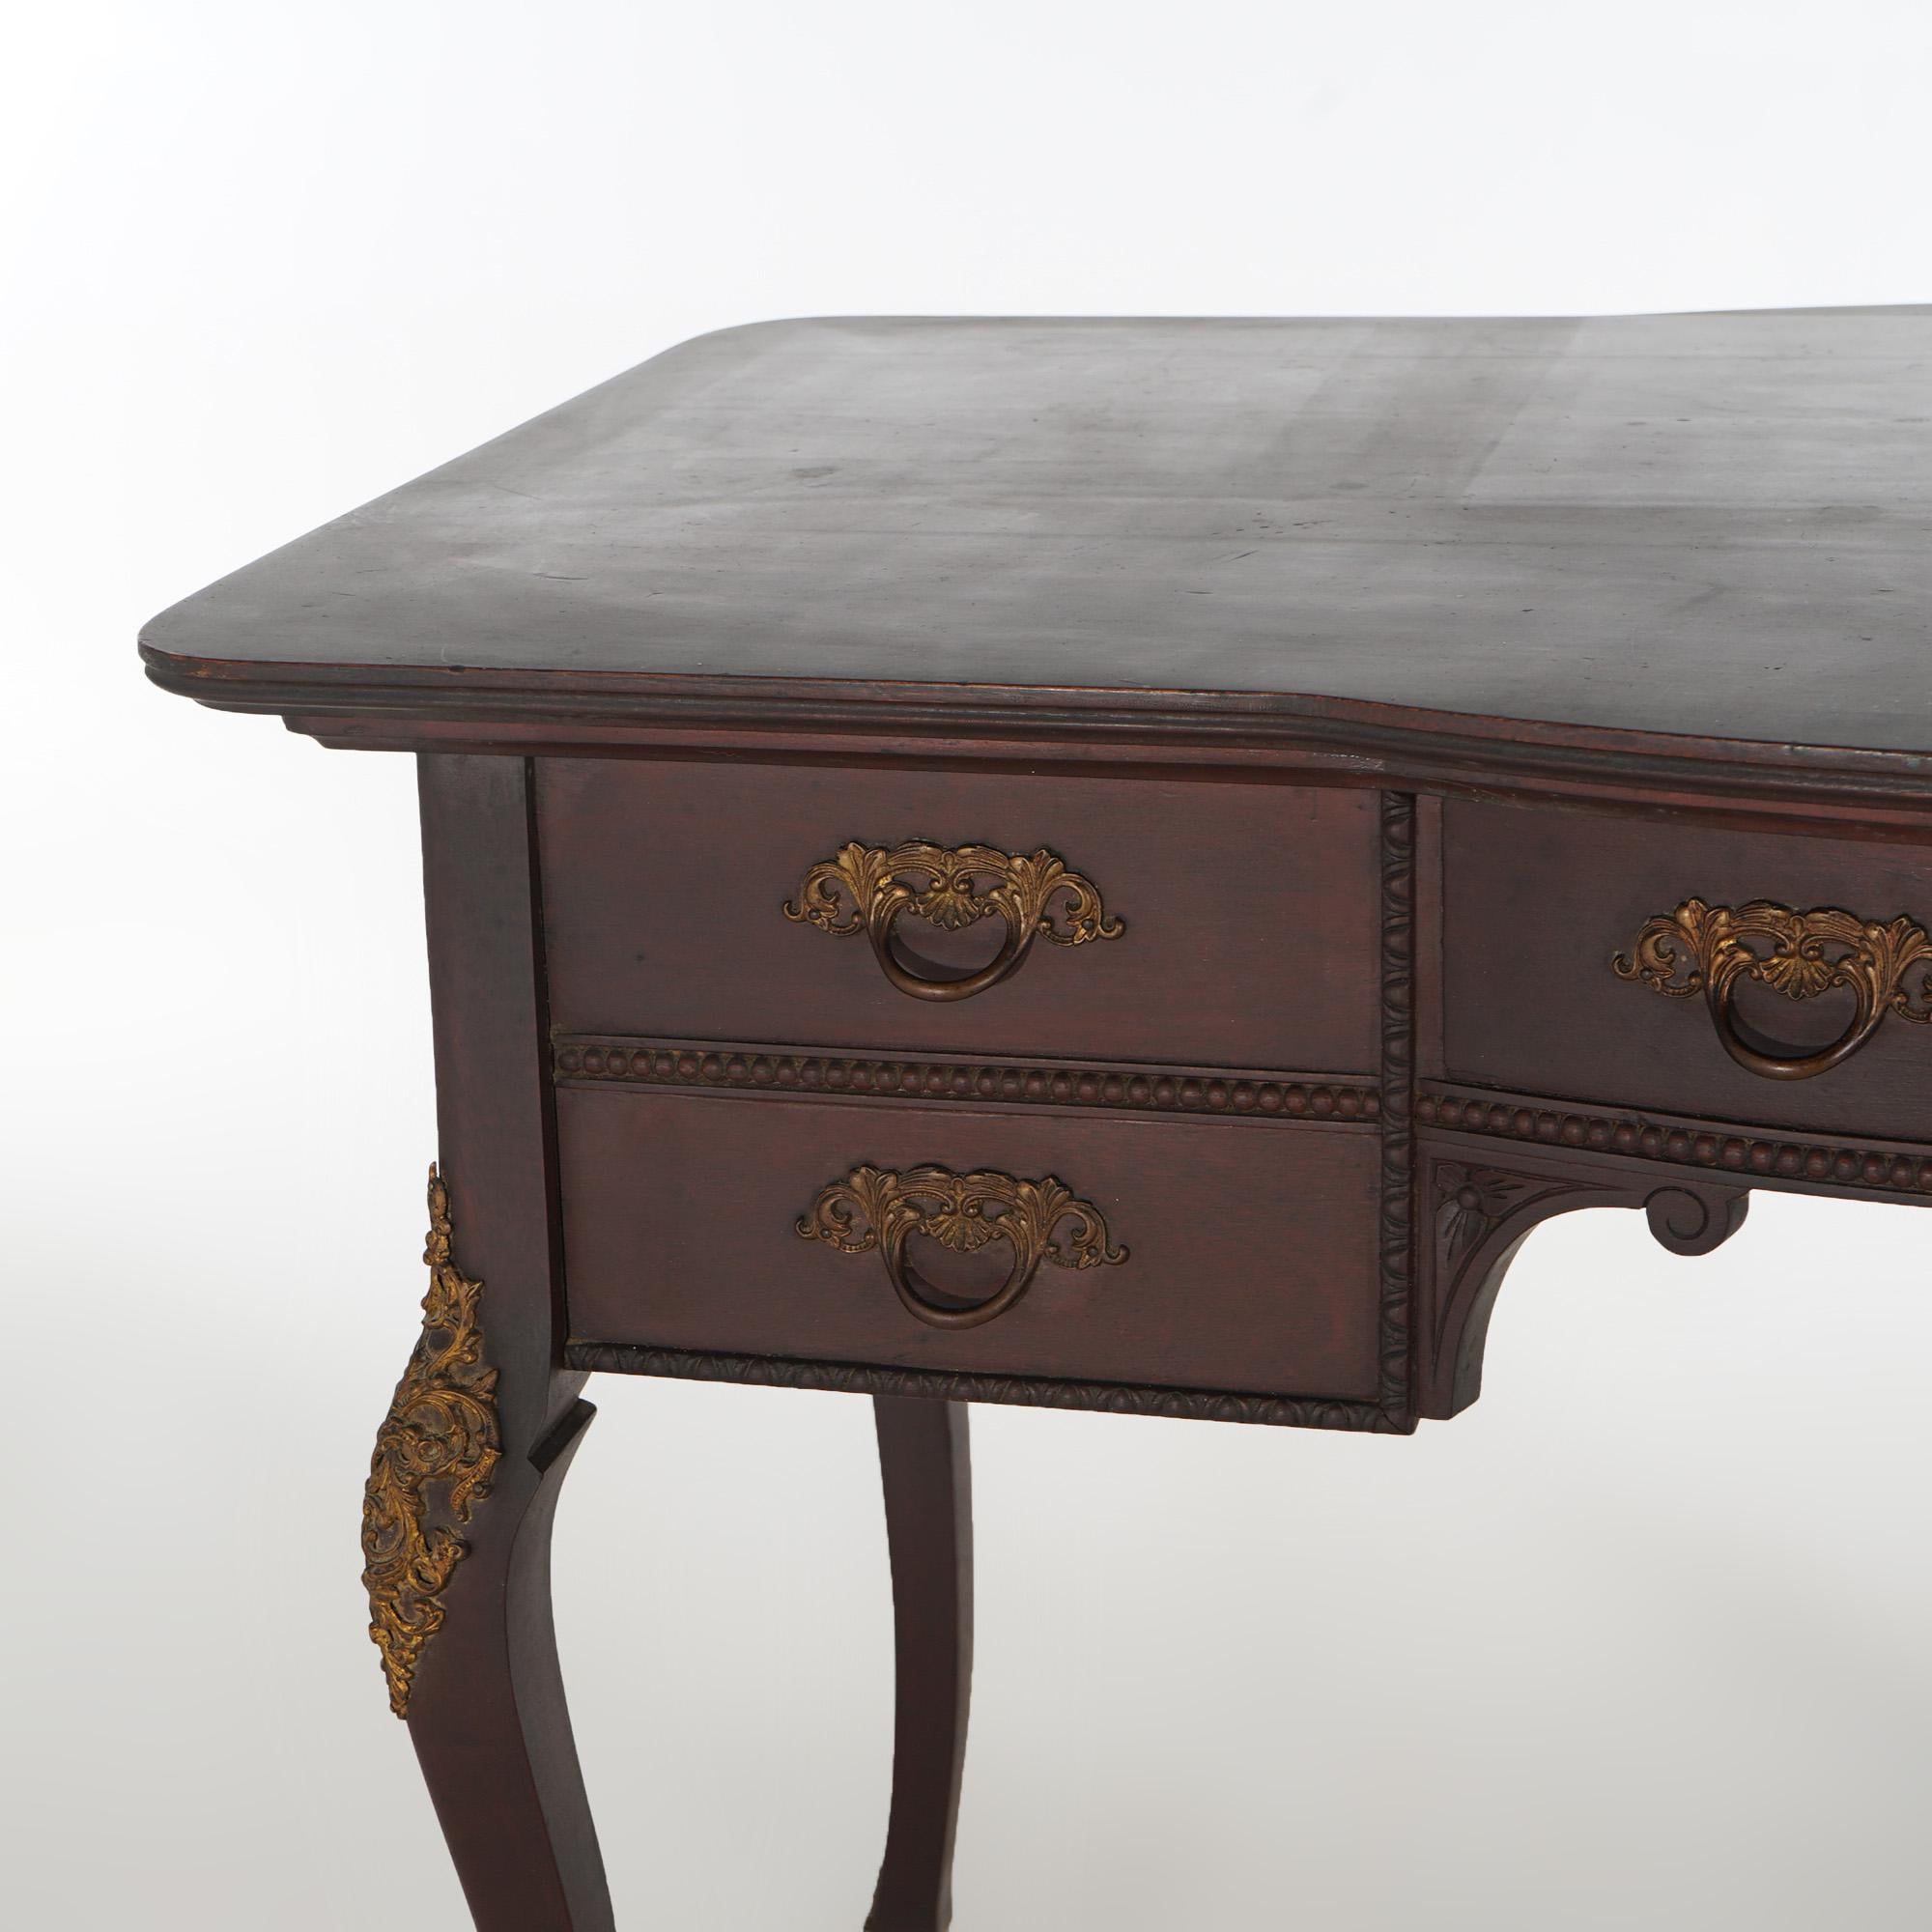 Antique French Mahogany & Ormolu Bureau Plat Writing Desk C1910 For Sale 15